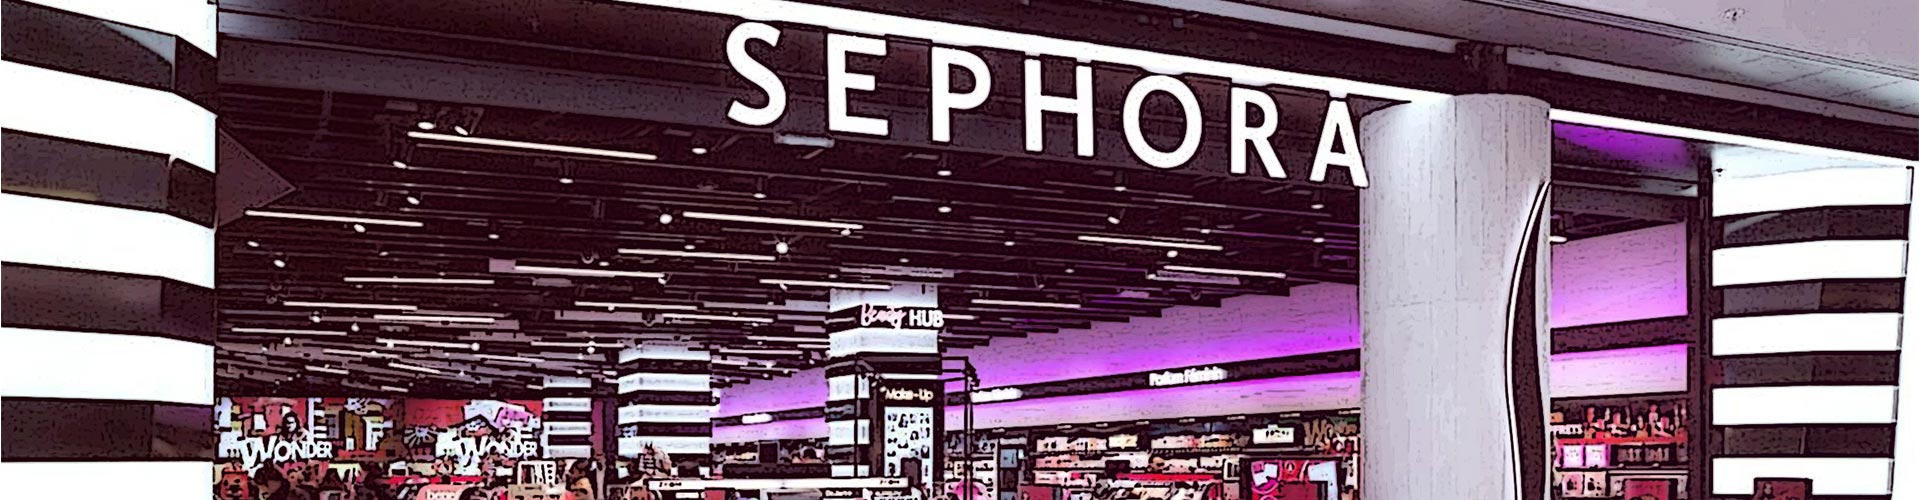 Blog banner featuring Sephora storefront